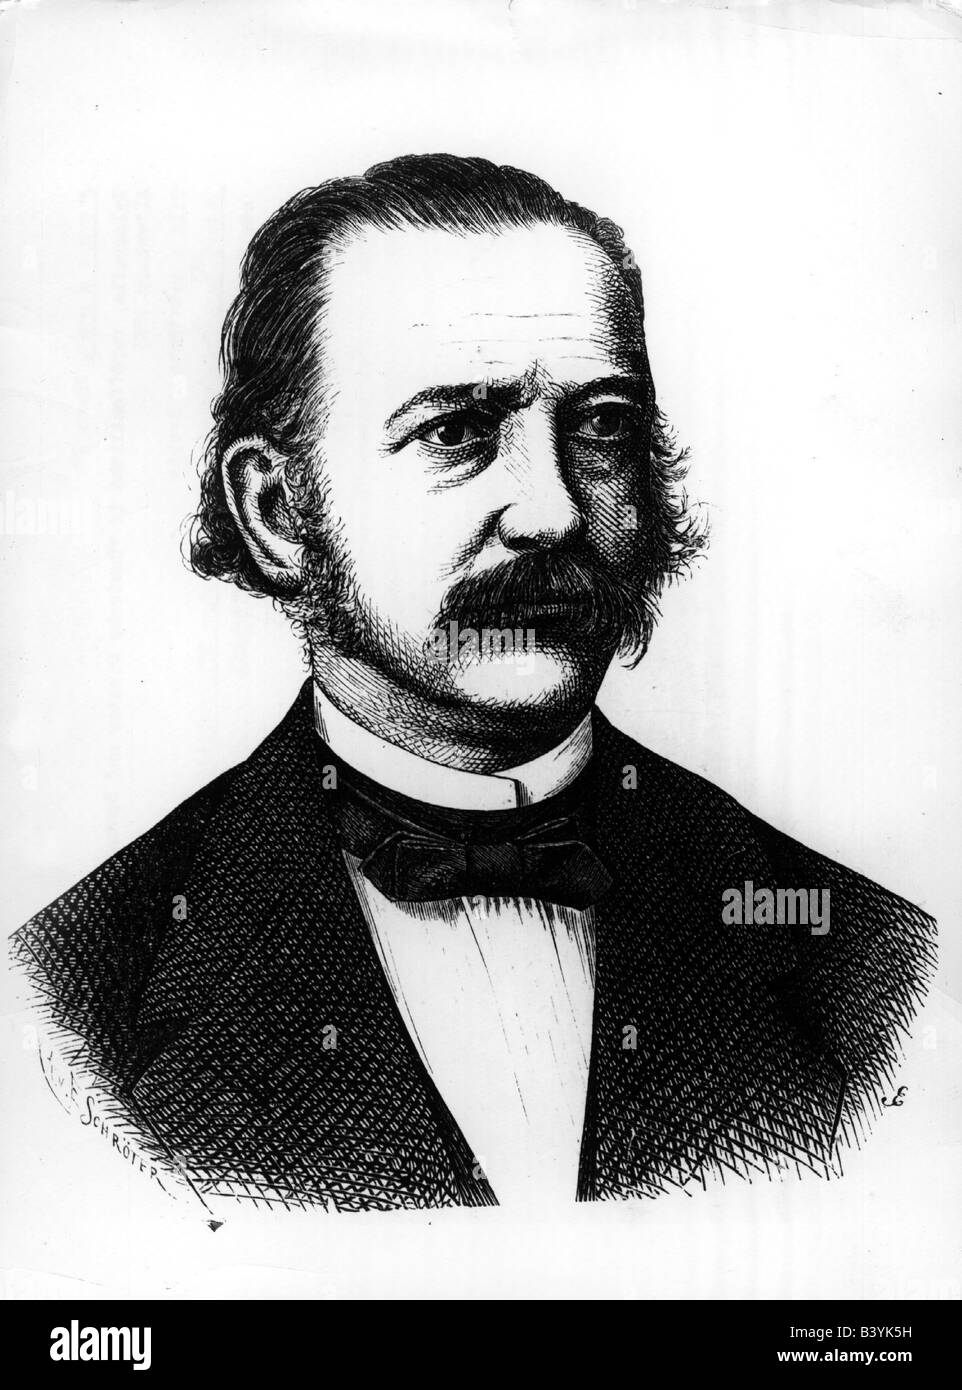 Fontane, Theodor, 30.12.1819 - 20.9.1898, German author / writer, poet, portrait, engraving, 1883, 19th century, , Stock Photo